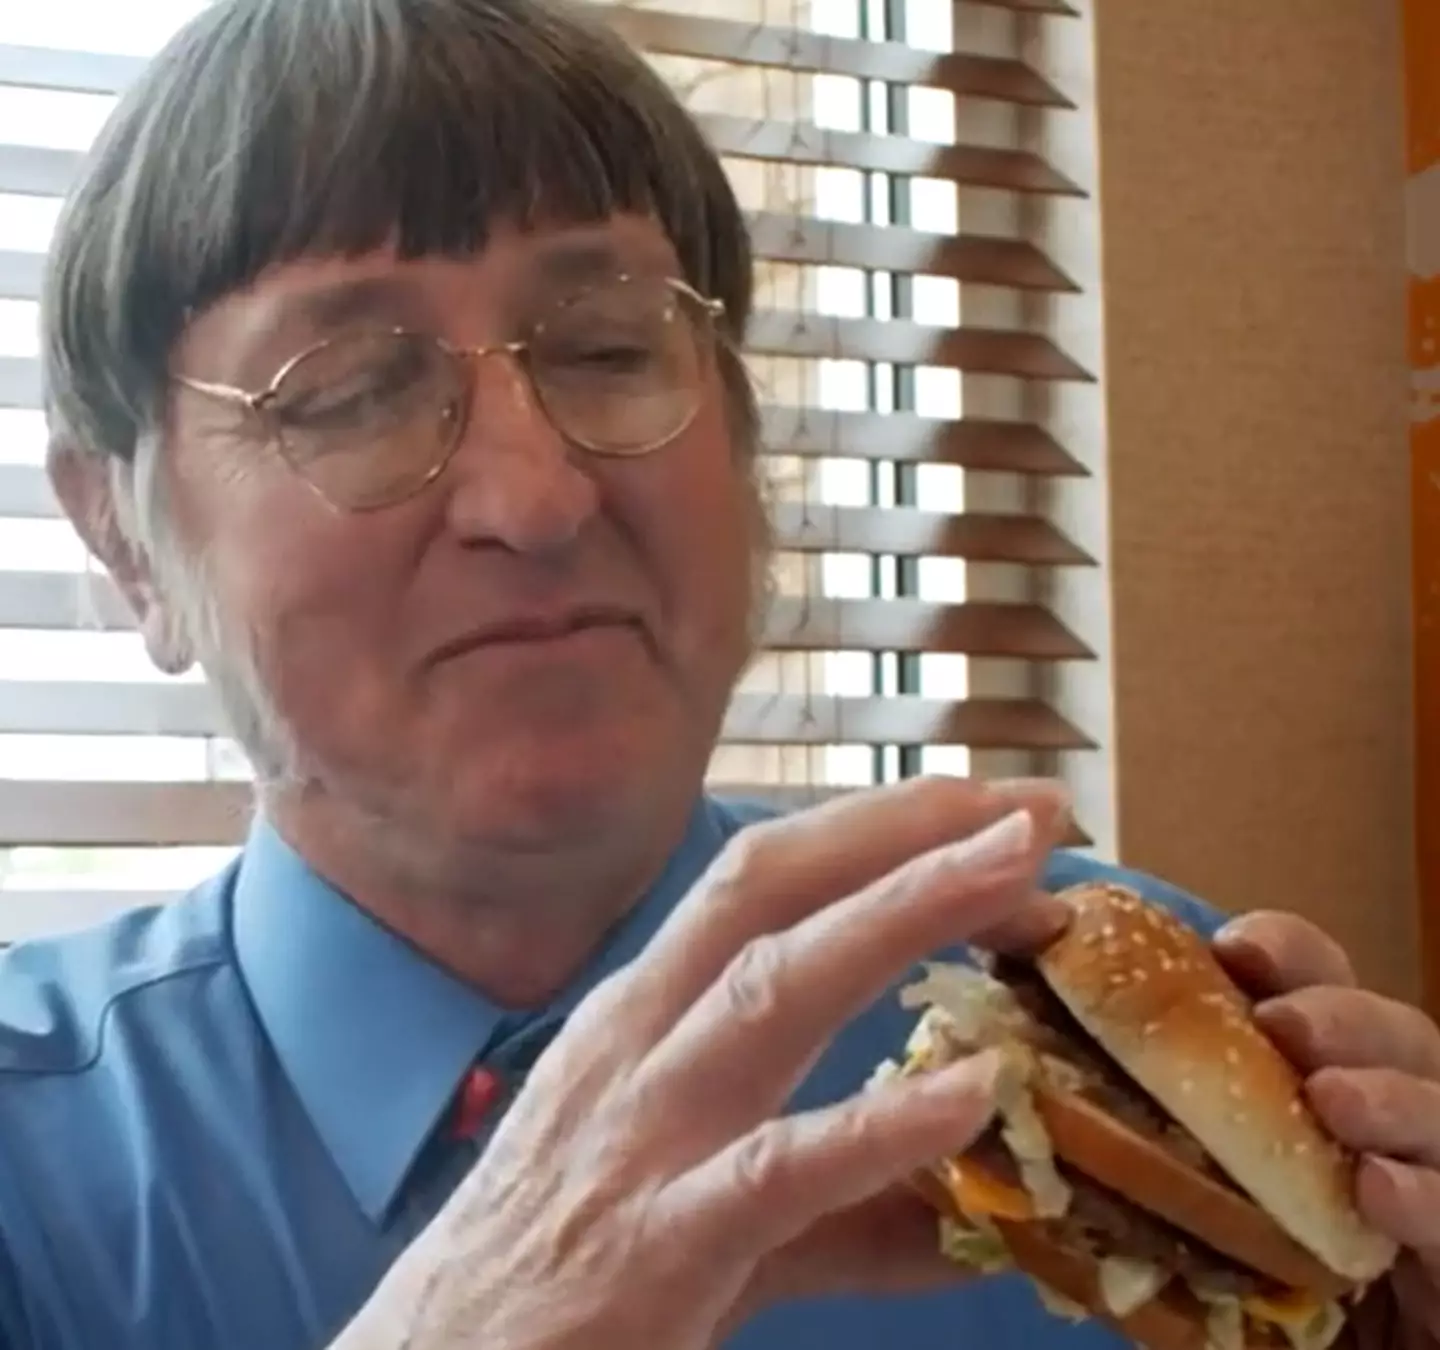 If you think you love Big Macs, Don Gorske has you beat.